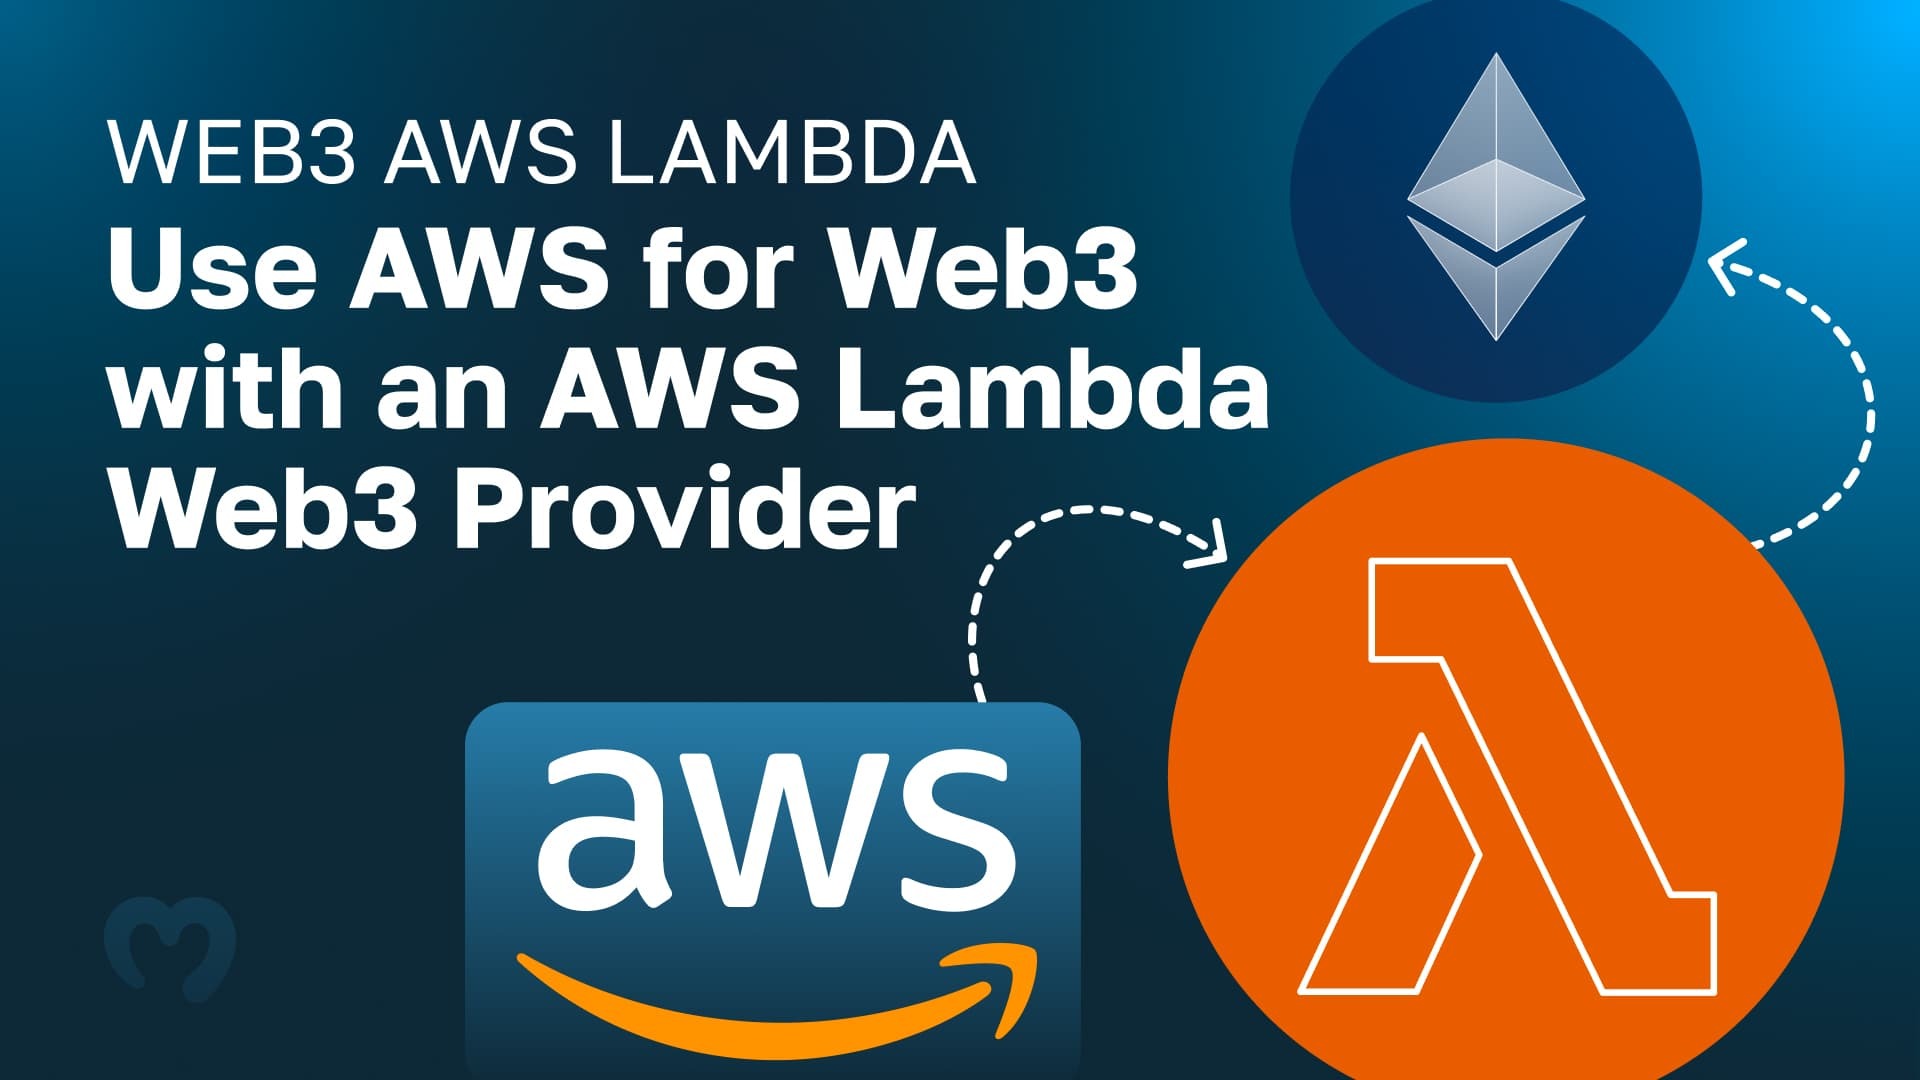 Web3 AWS Lambda steps to get Web3 ready with AWS